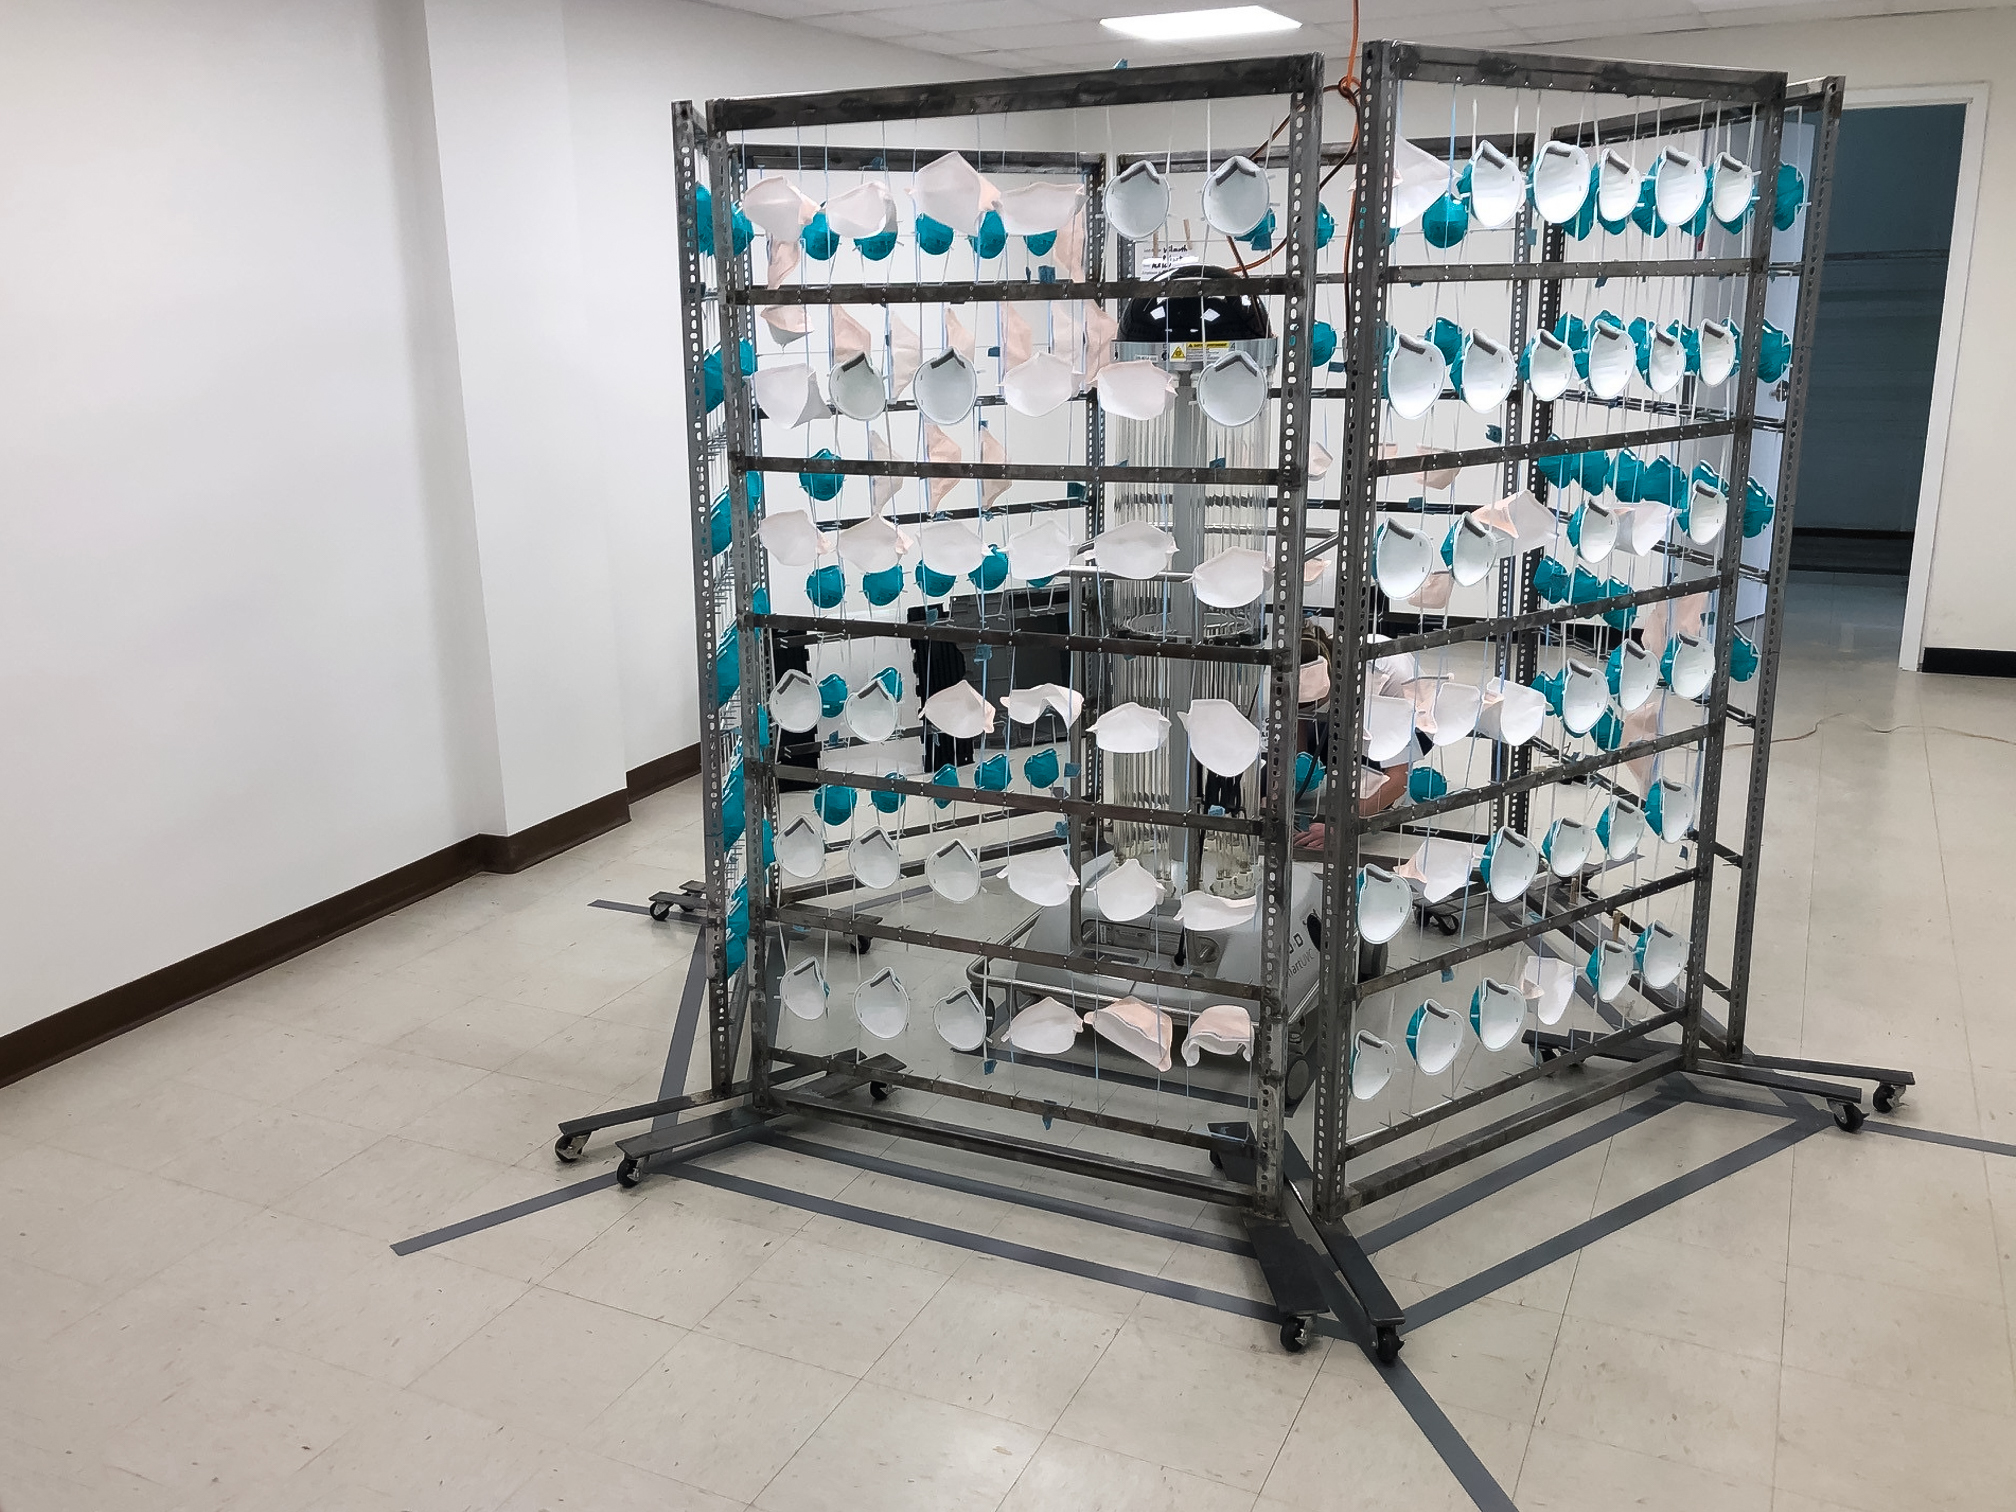 VCU Health’s innovative decontamination process mitigates N95 mask shortage in hospitals